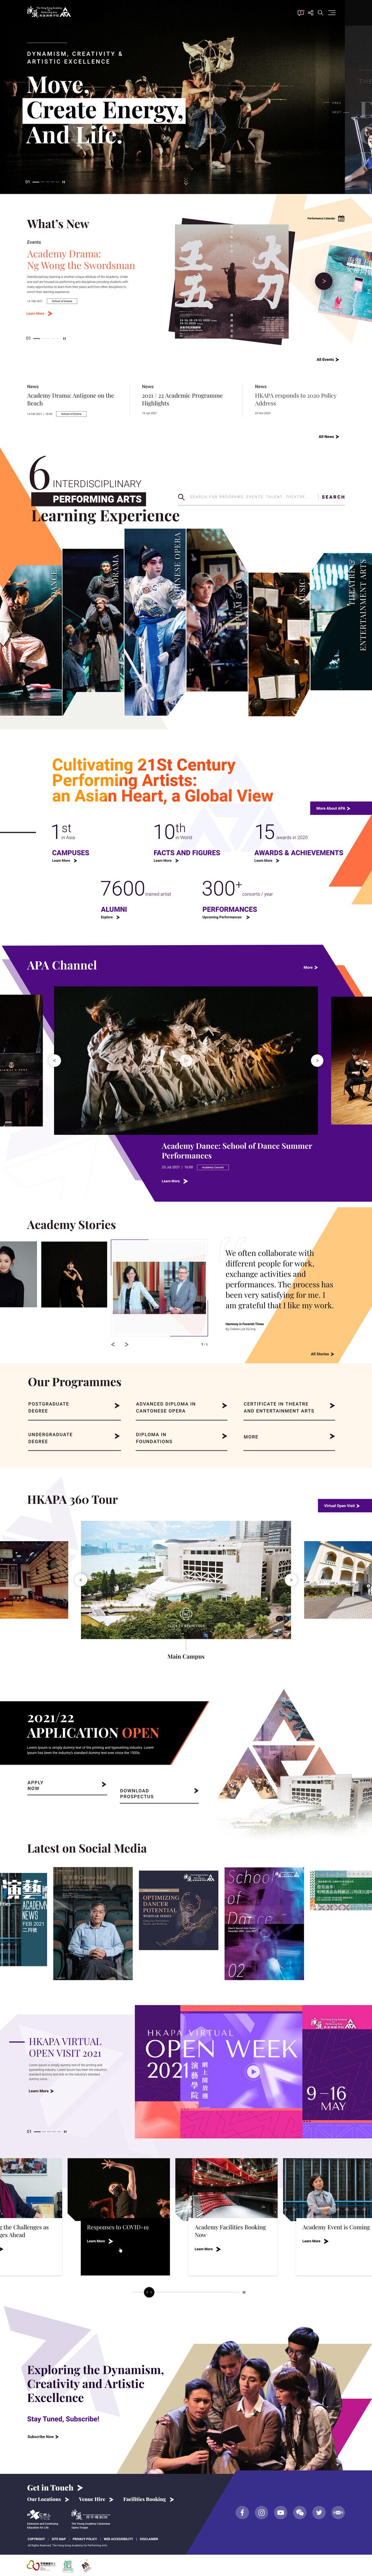 Hong Kong Academy for Performing Arts website screenshot for desktop version 1 of 7